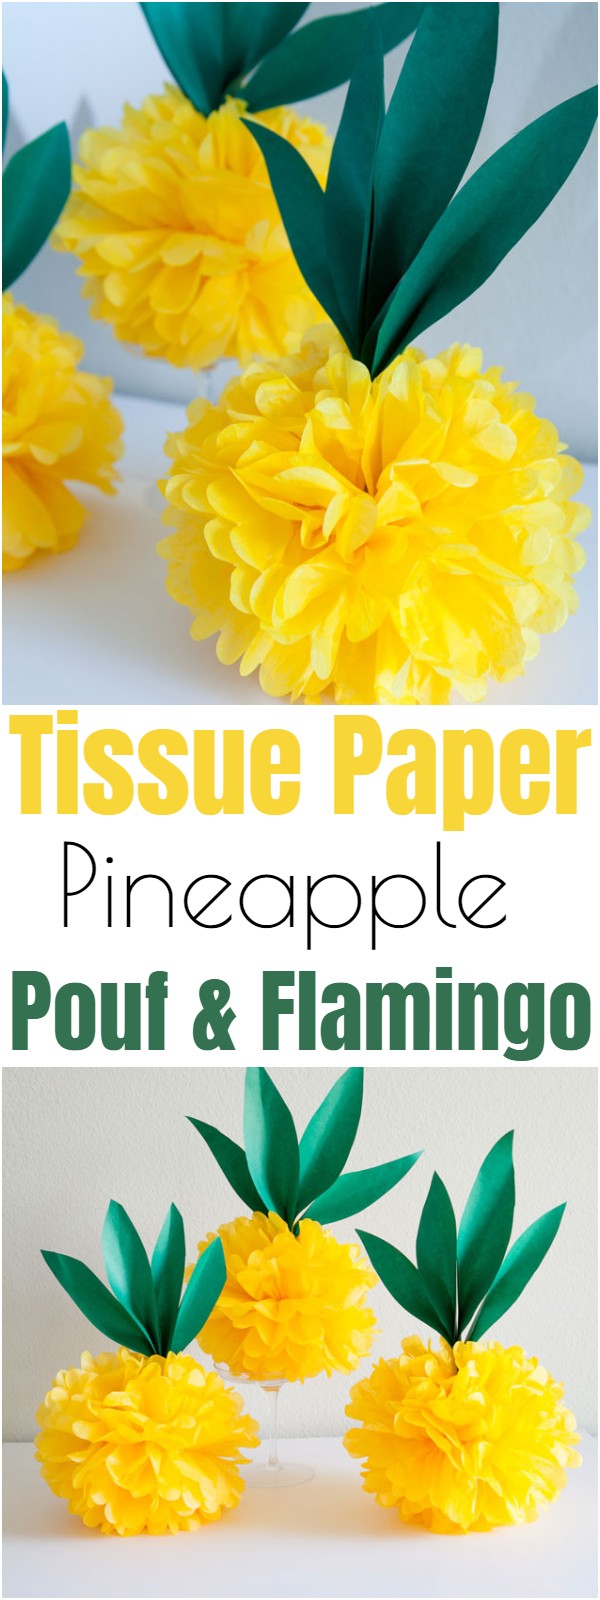 Tissue Paper Pineapple Pouf & Flamingo